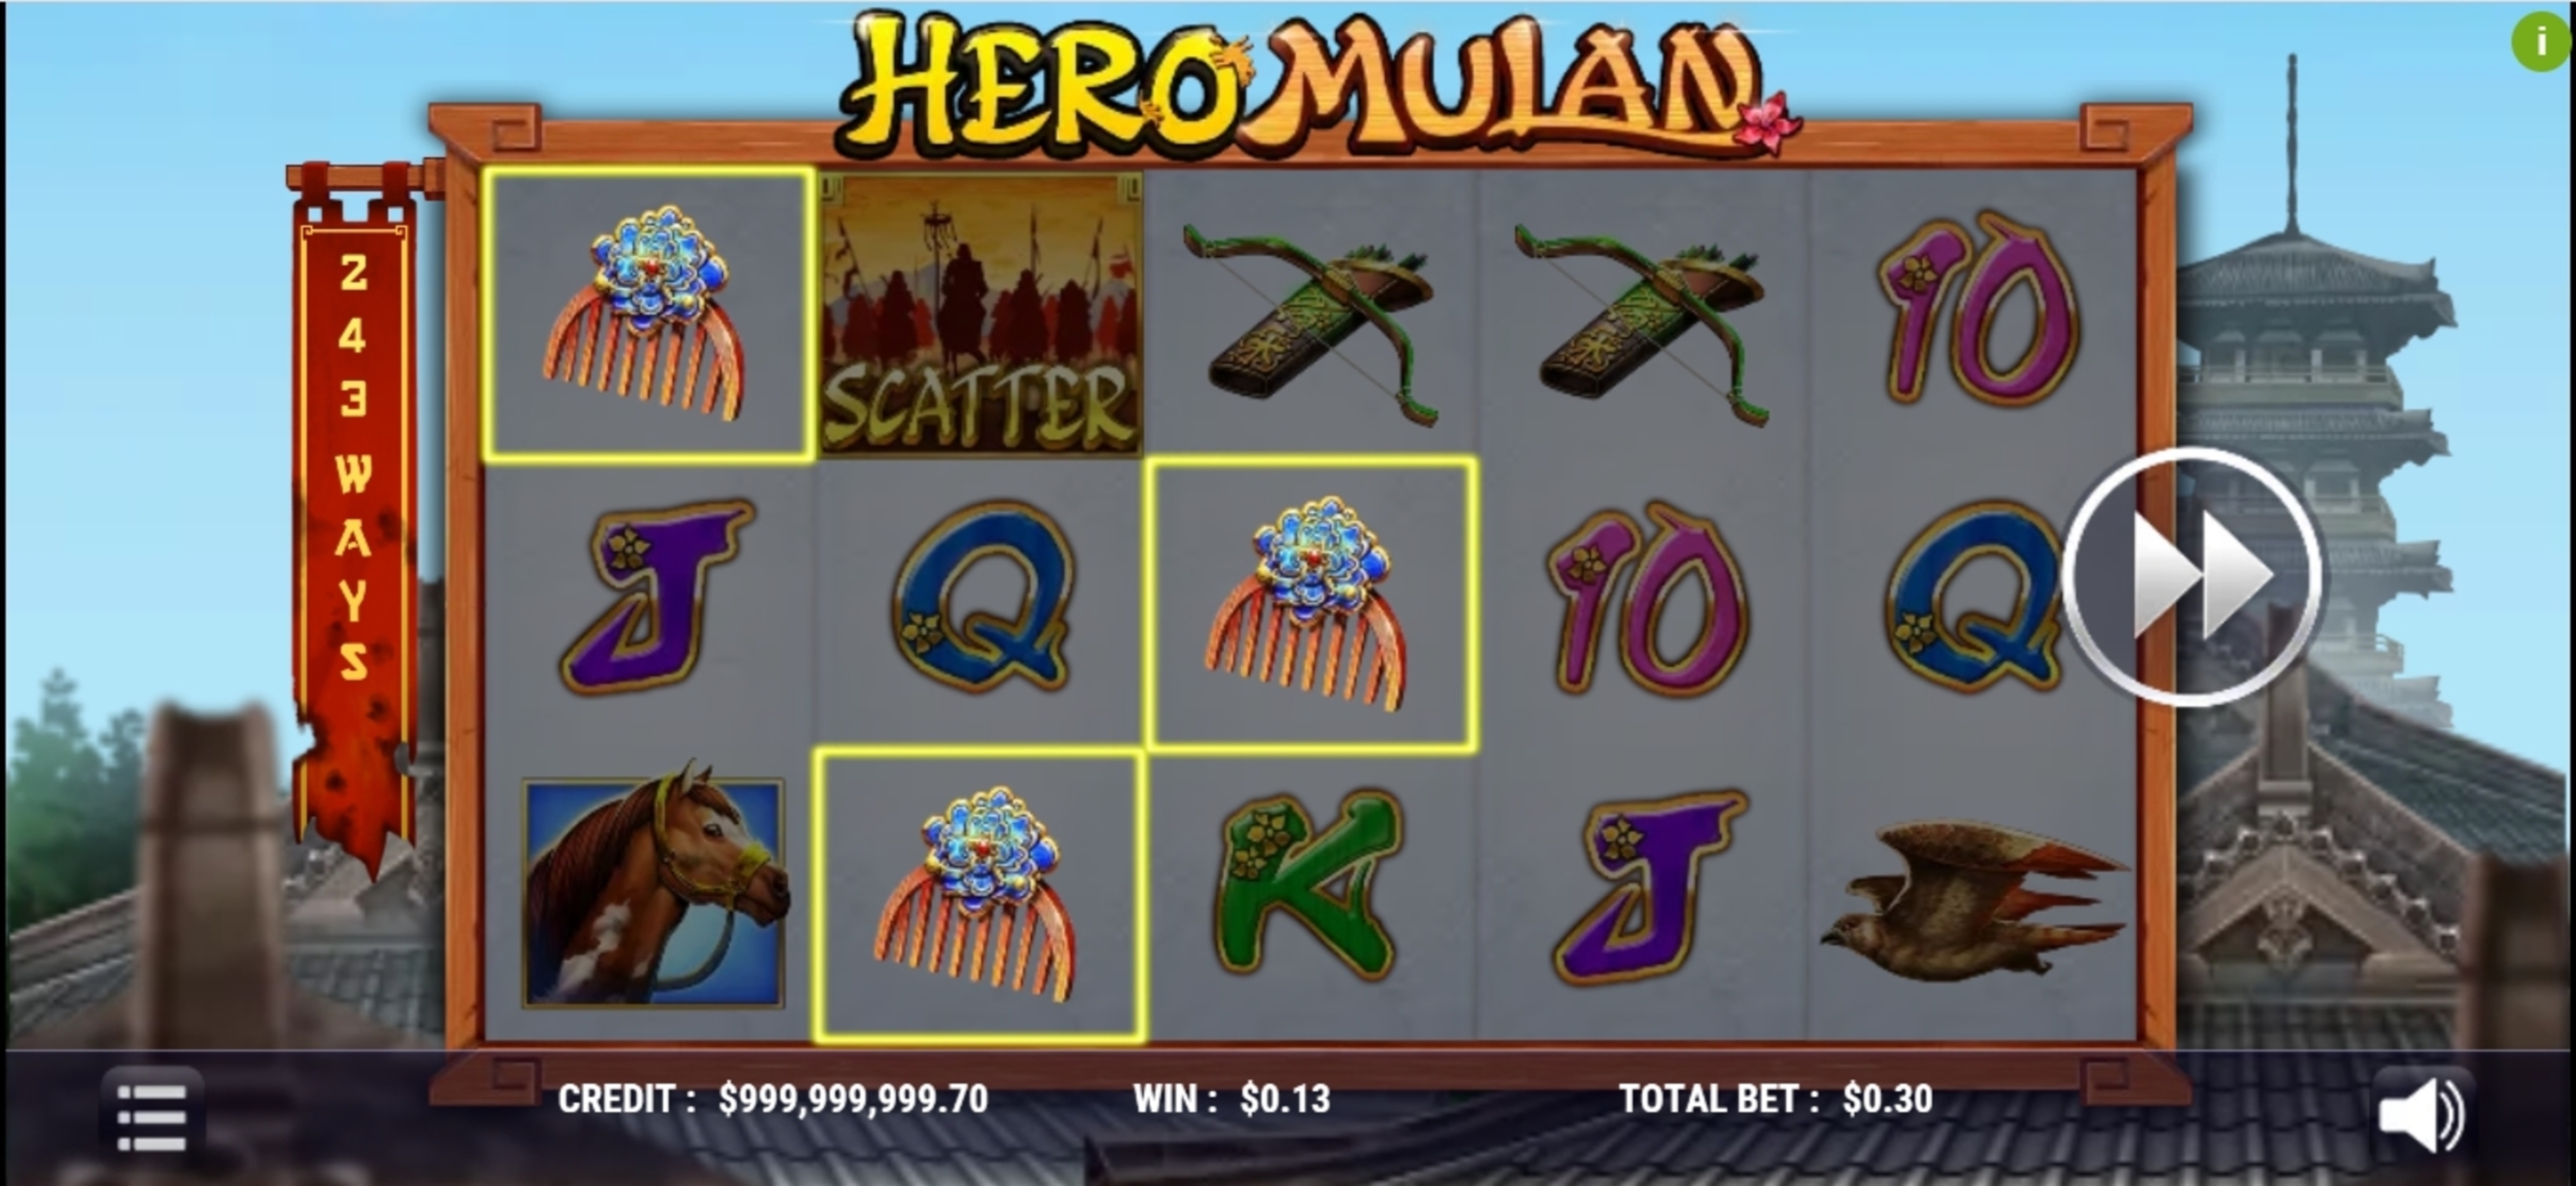 Win Money in Hero Mulan Free Slot Game by Slot Factory